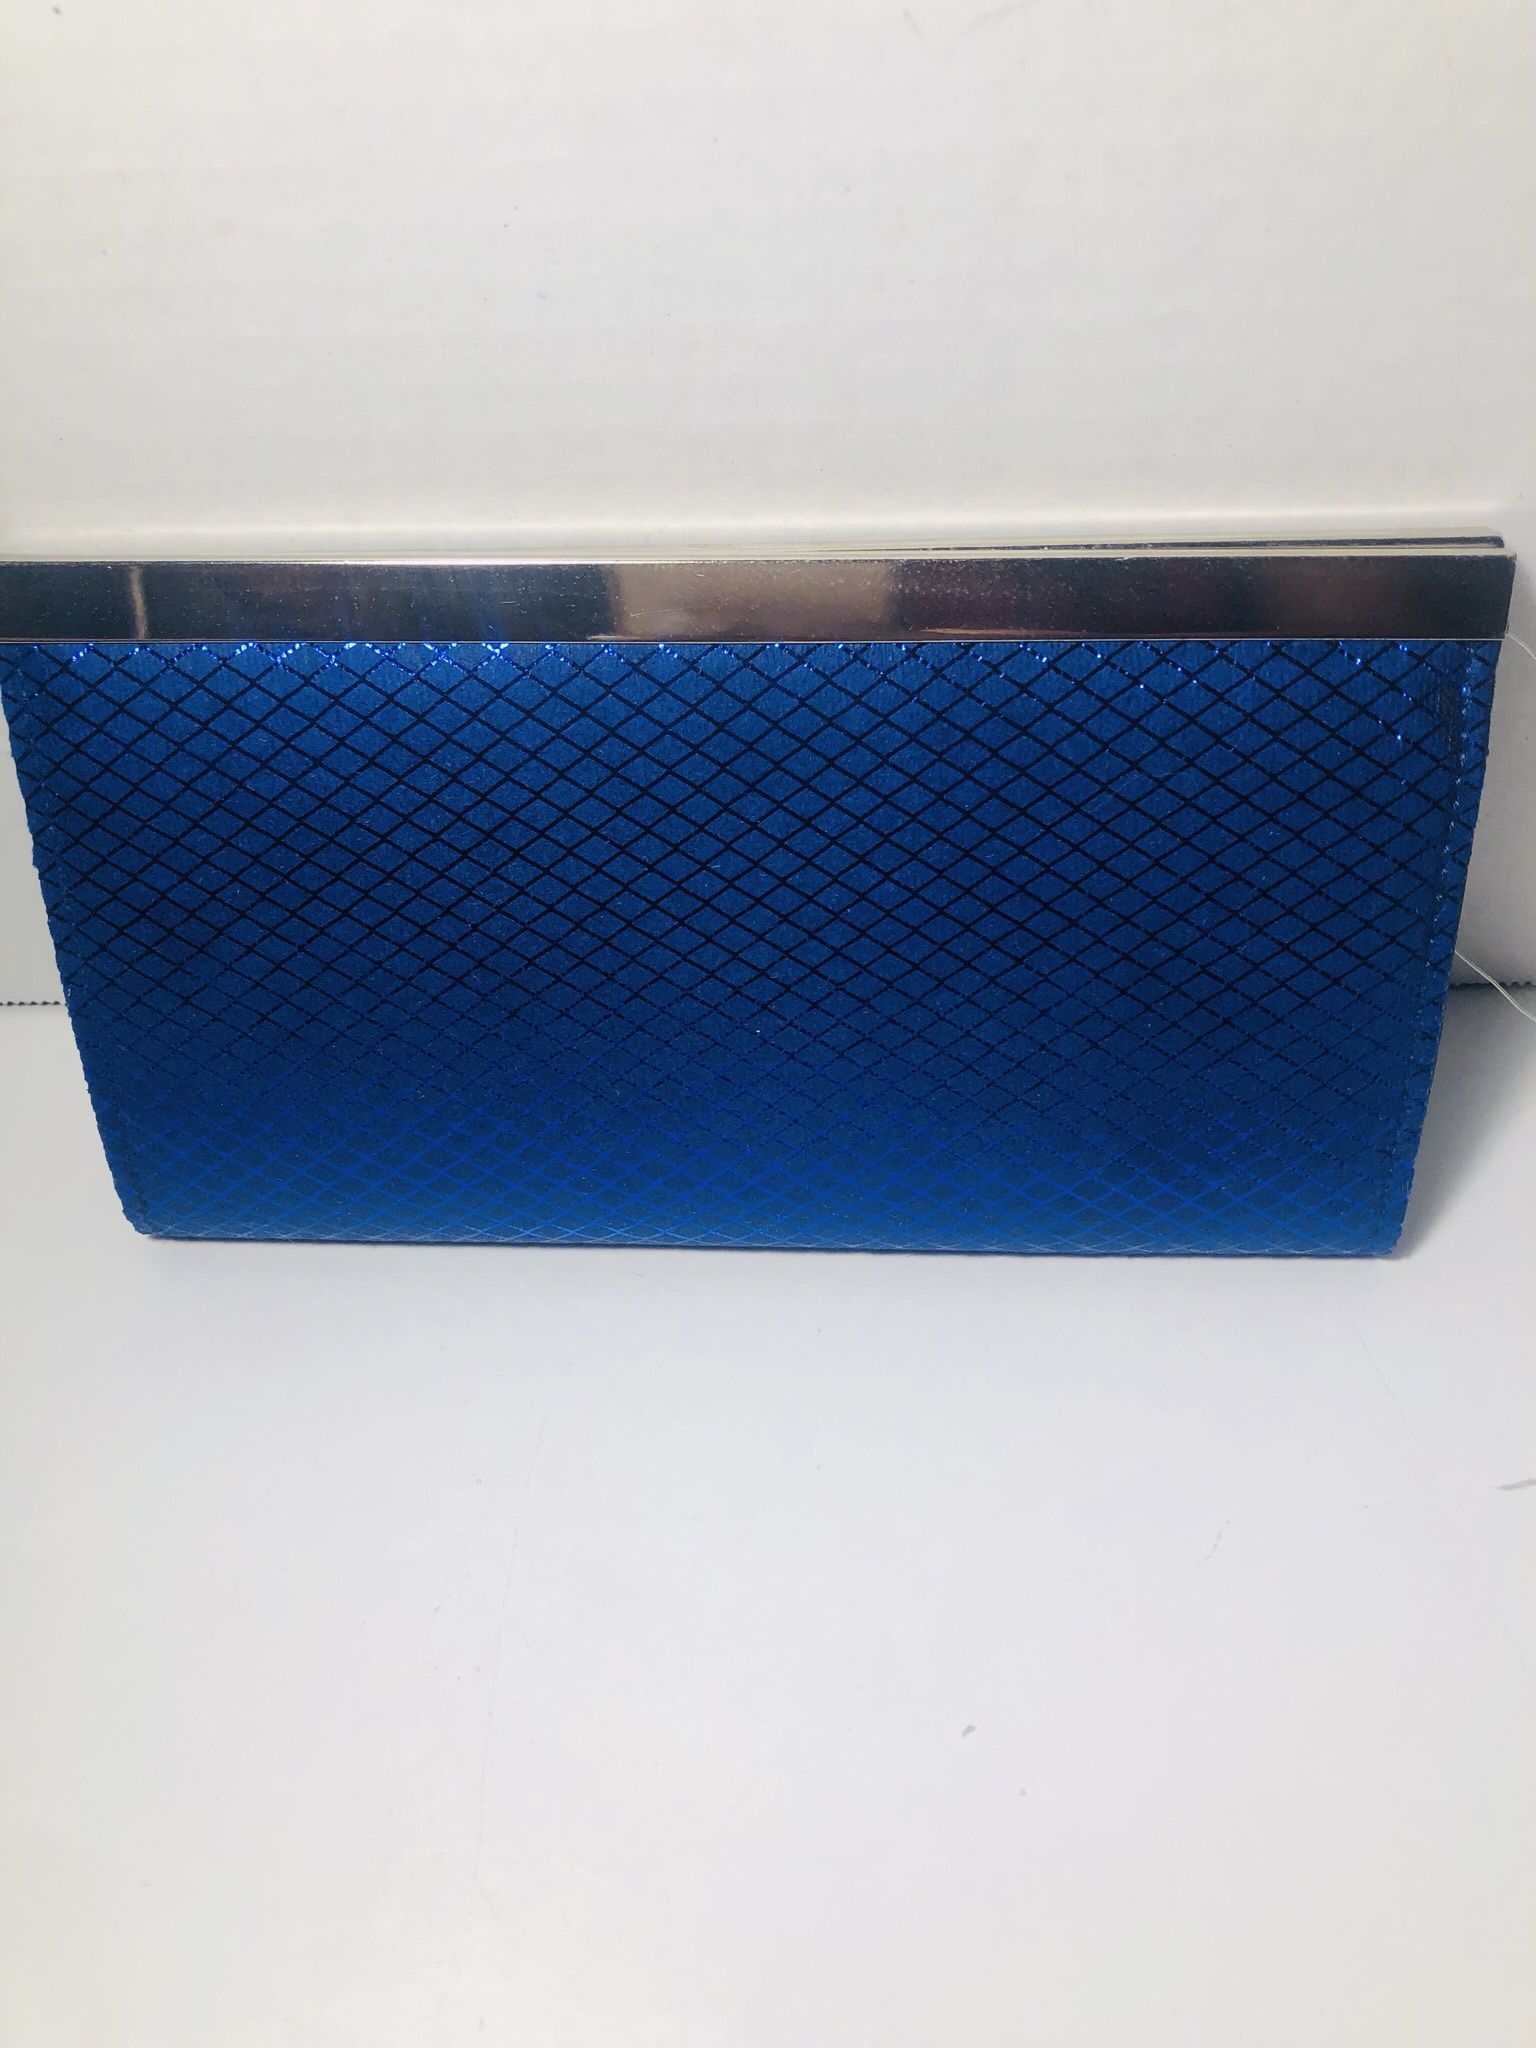 Beautiful Blue Clutch Wallet Excellent Condition 